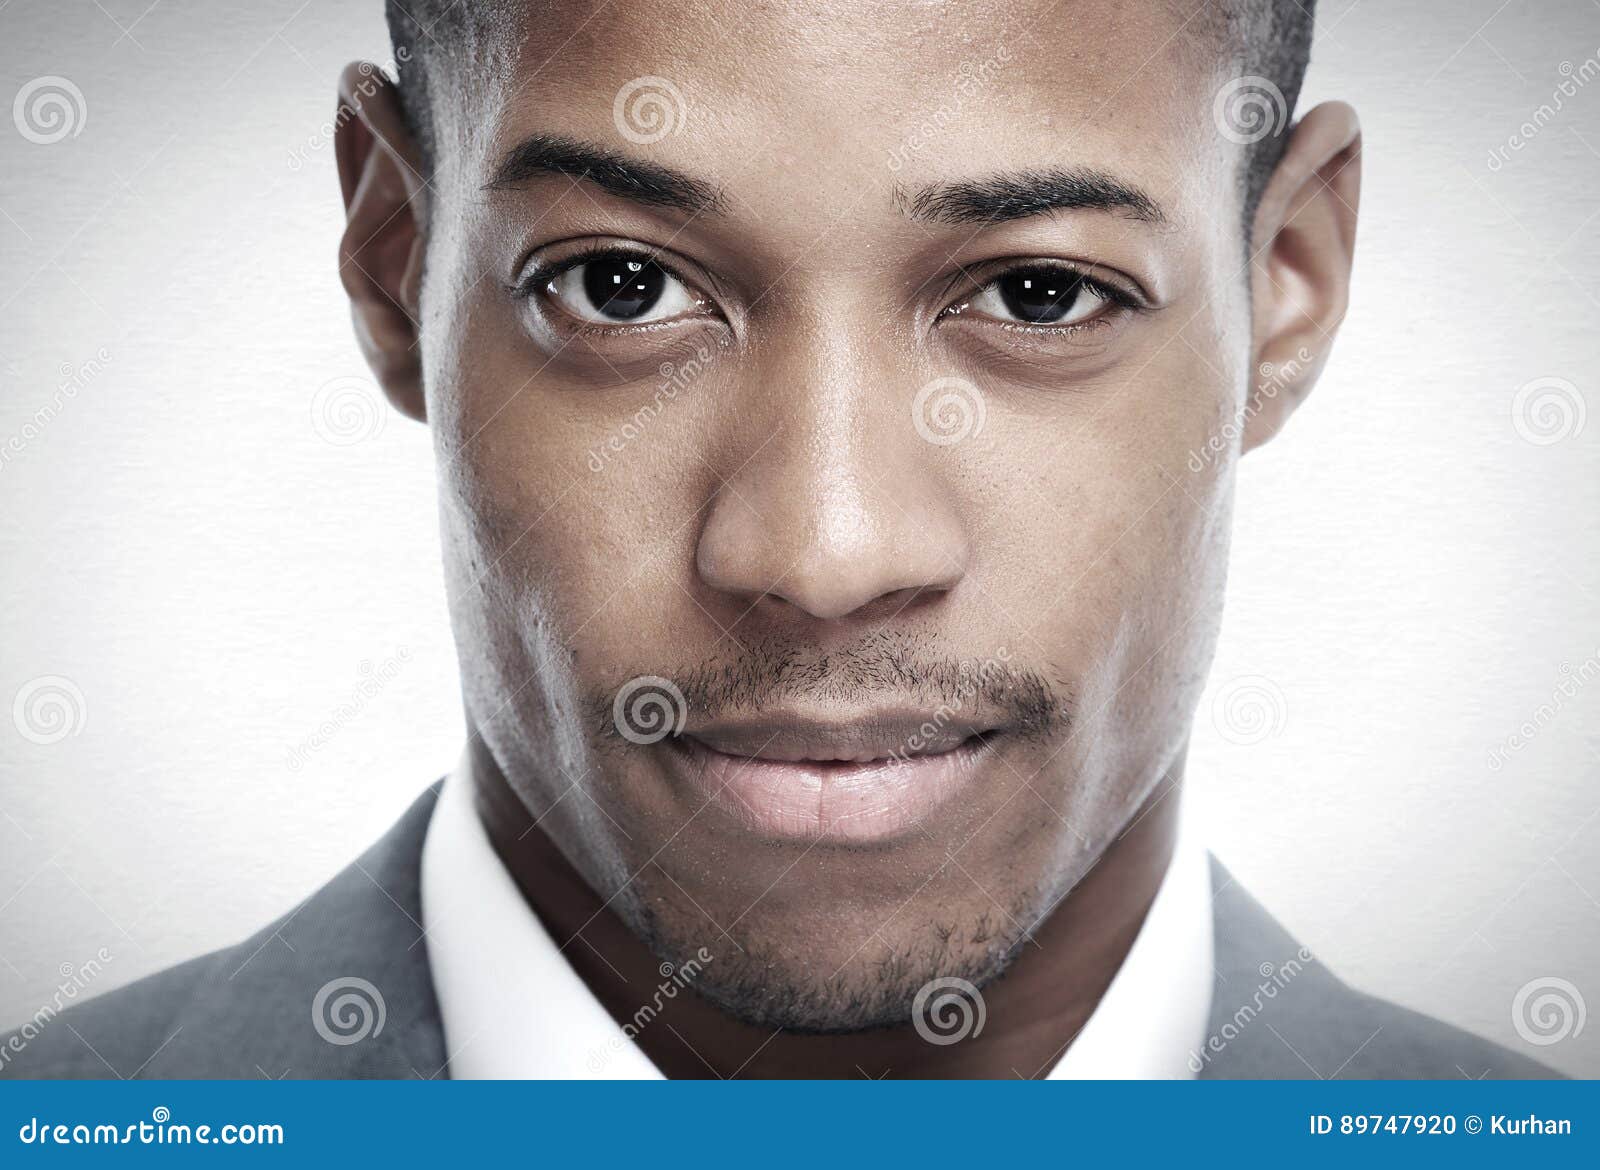 african american men faces